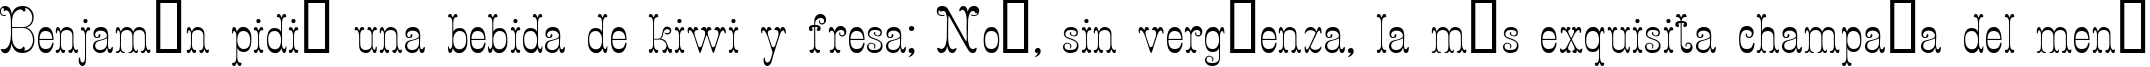 Пример написания шрифтом Figurny текста на испанском